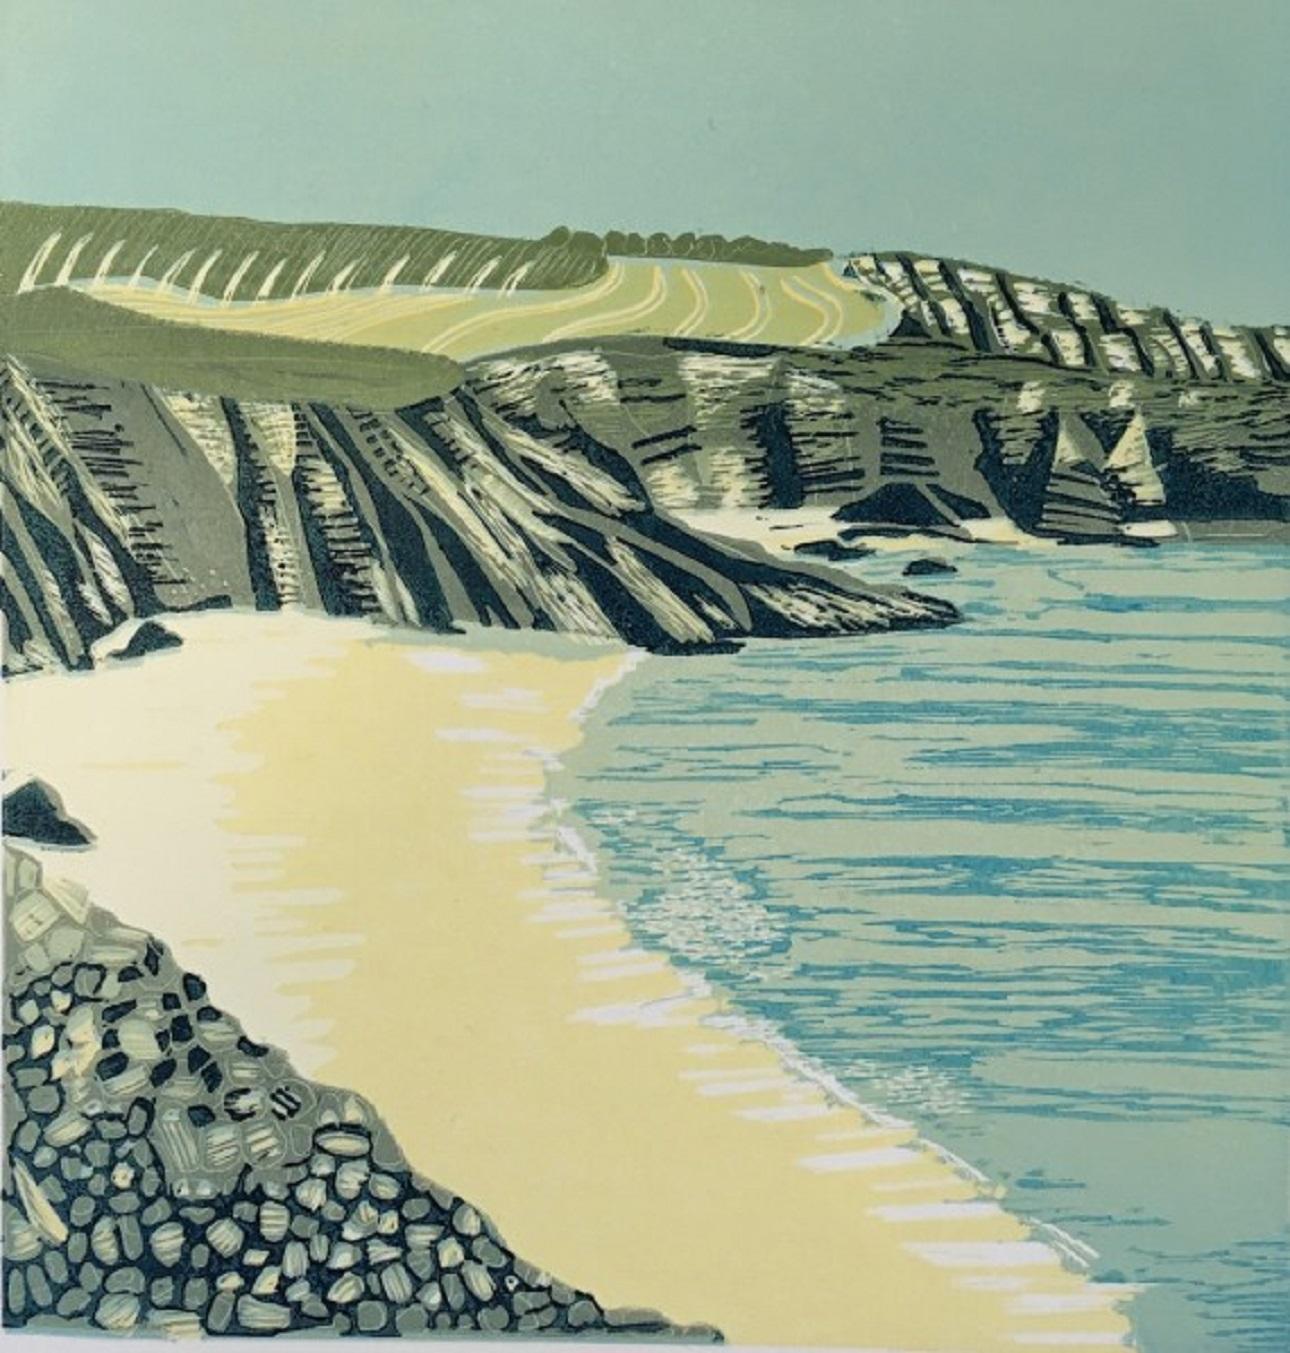 Ann Burnham Landscape Print - By the Seaside, Limited edition seascape print